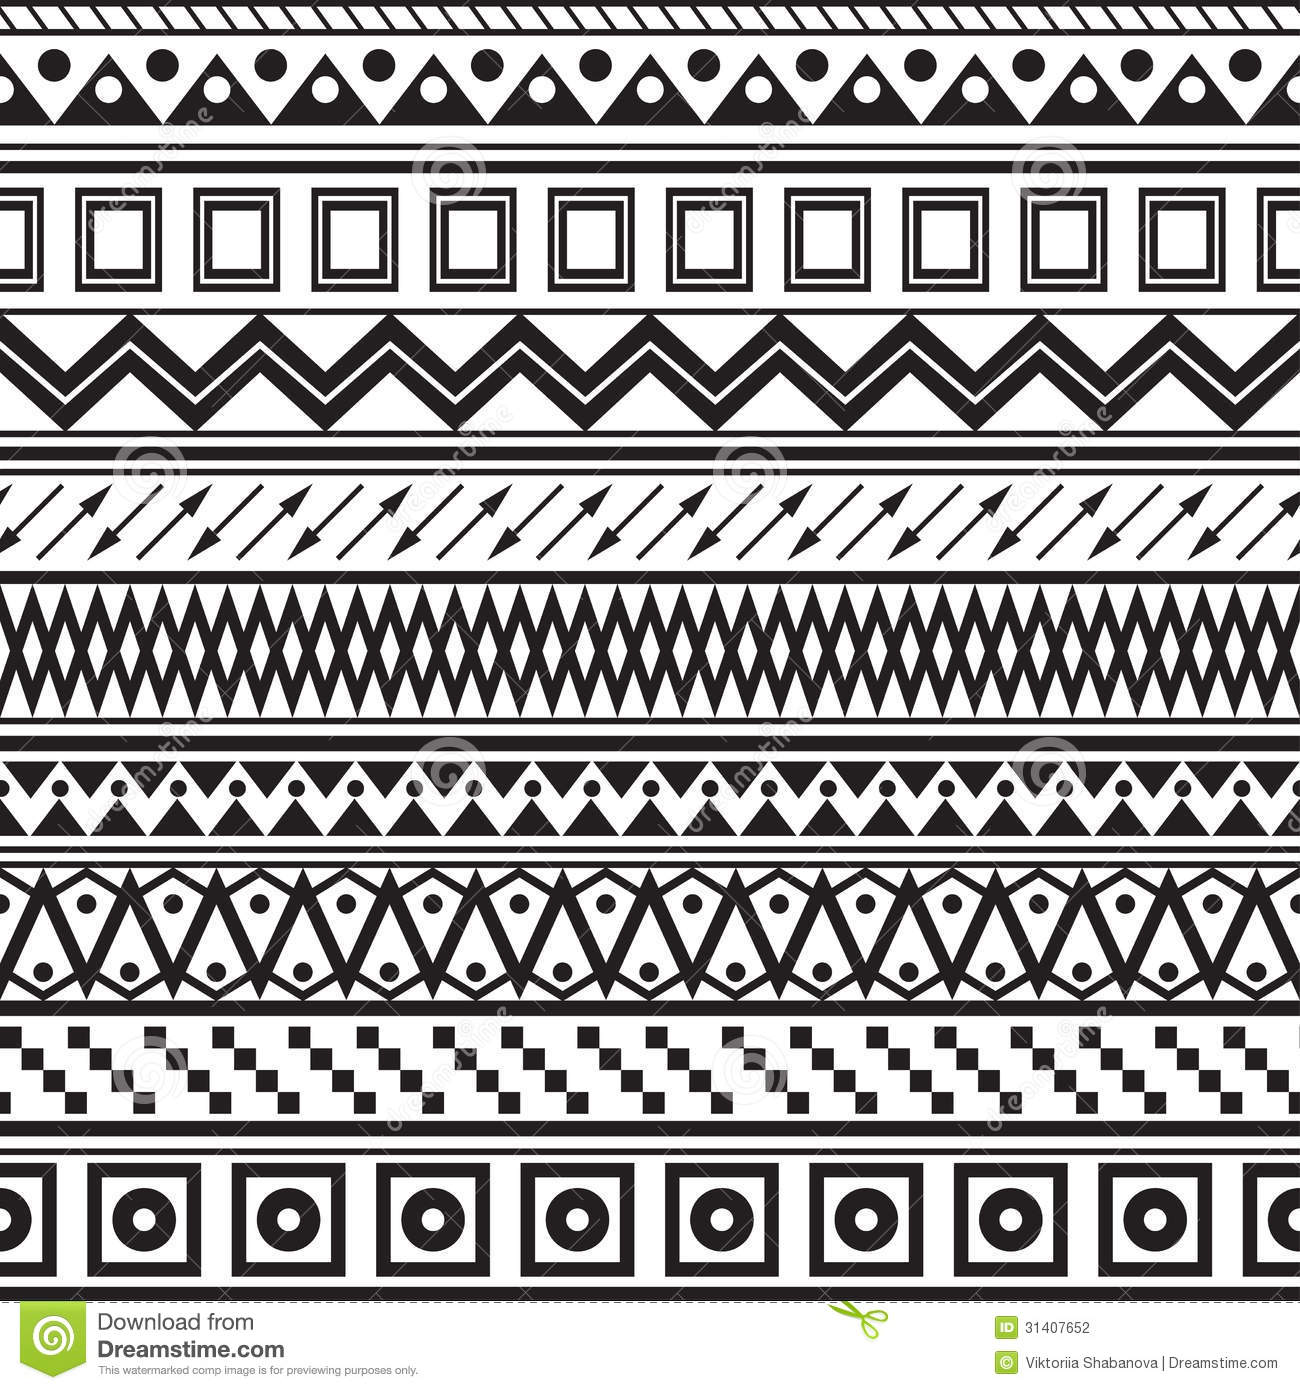 Geometric Black White And Tribal Print Wallpaper